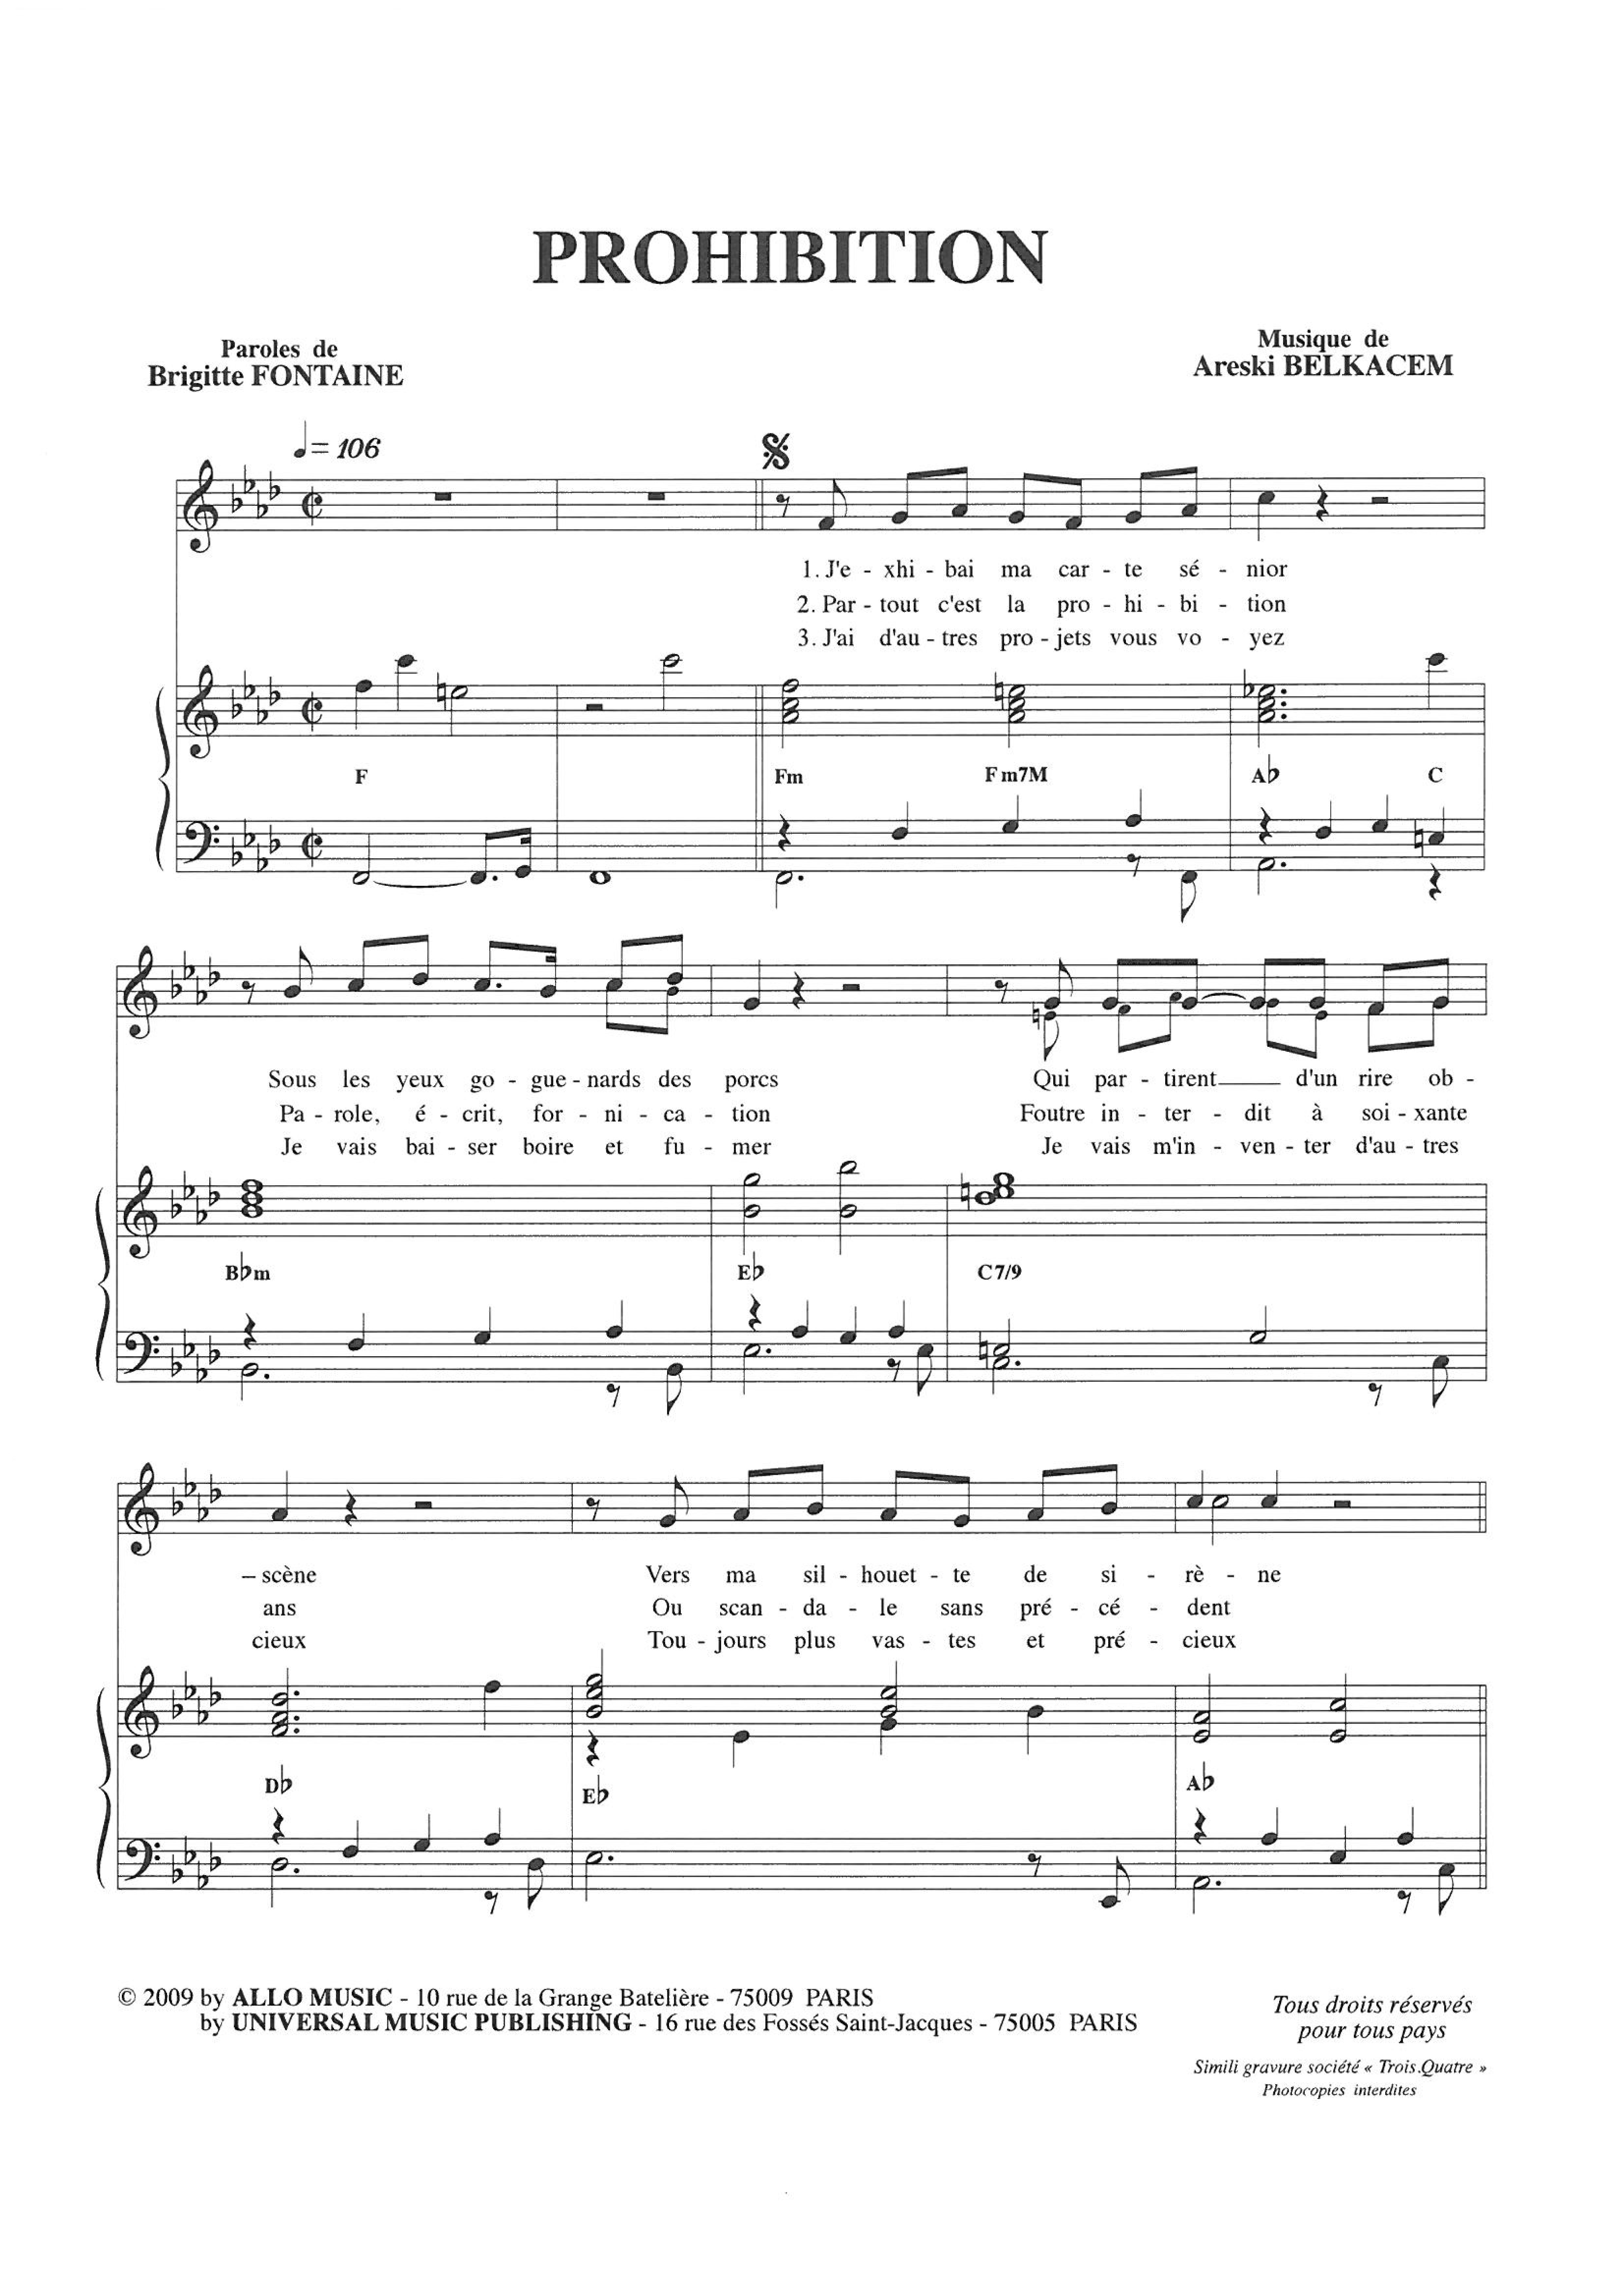 Brigitte Fontaine & Areski Belkacem Prohibition Sheet Music Notes & Chords for Piano & Vocal - Download or Print PDF